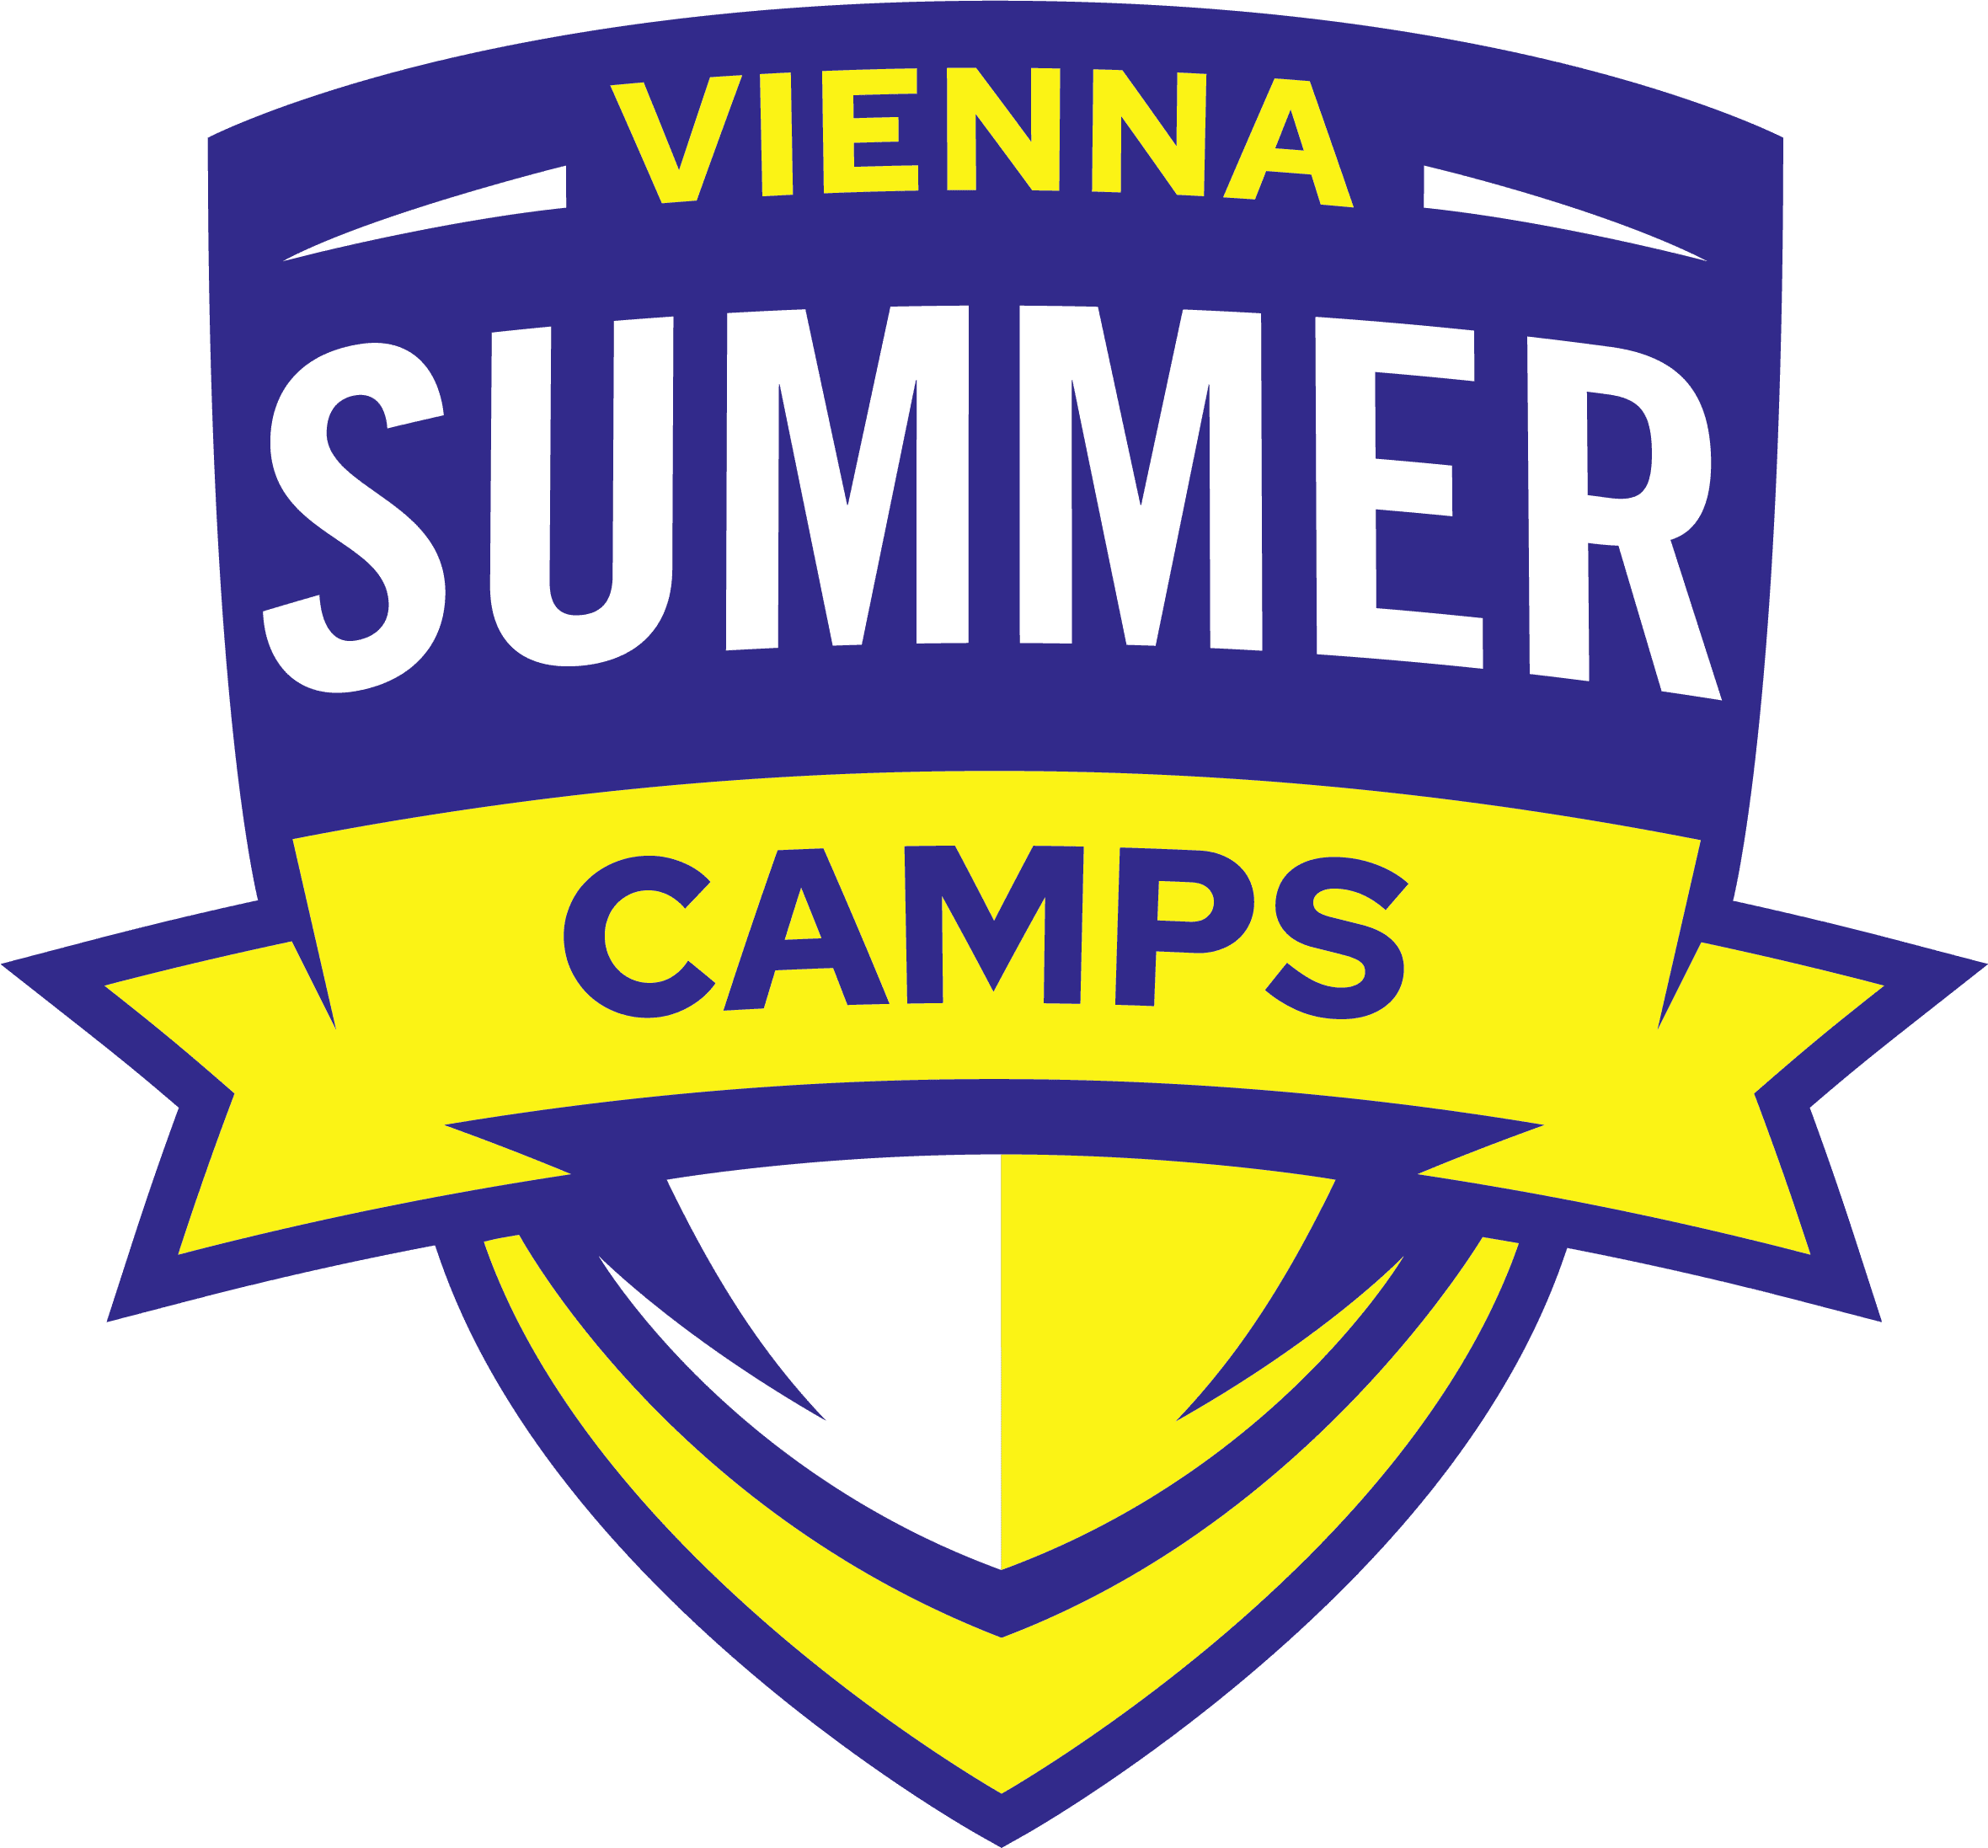 (c) Viennasummercamps.at